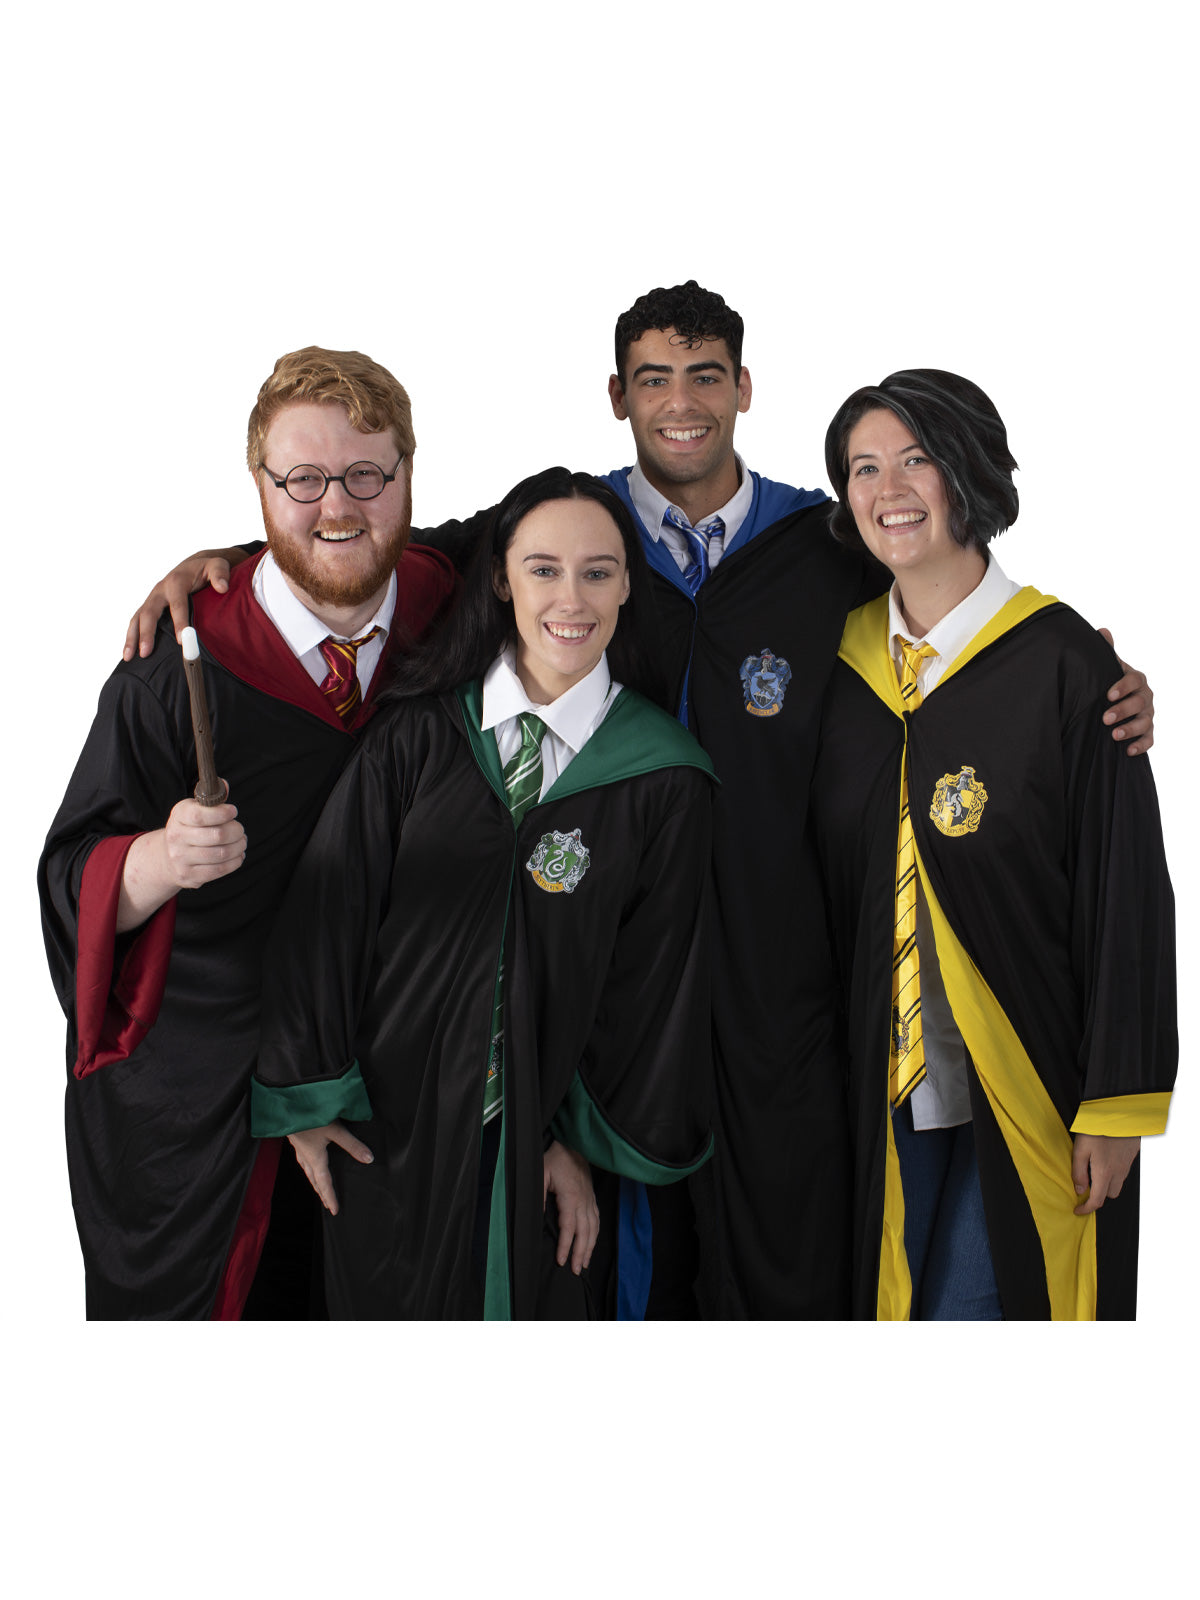 Harry Potter Ravenclaw Adult Costume Robe - Licensed